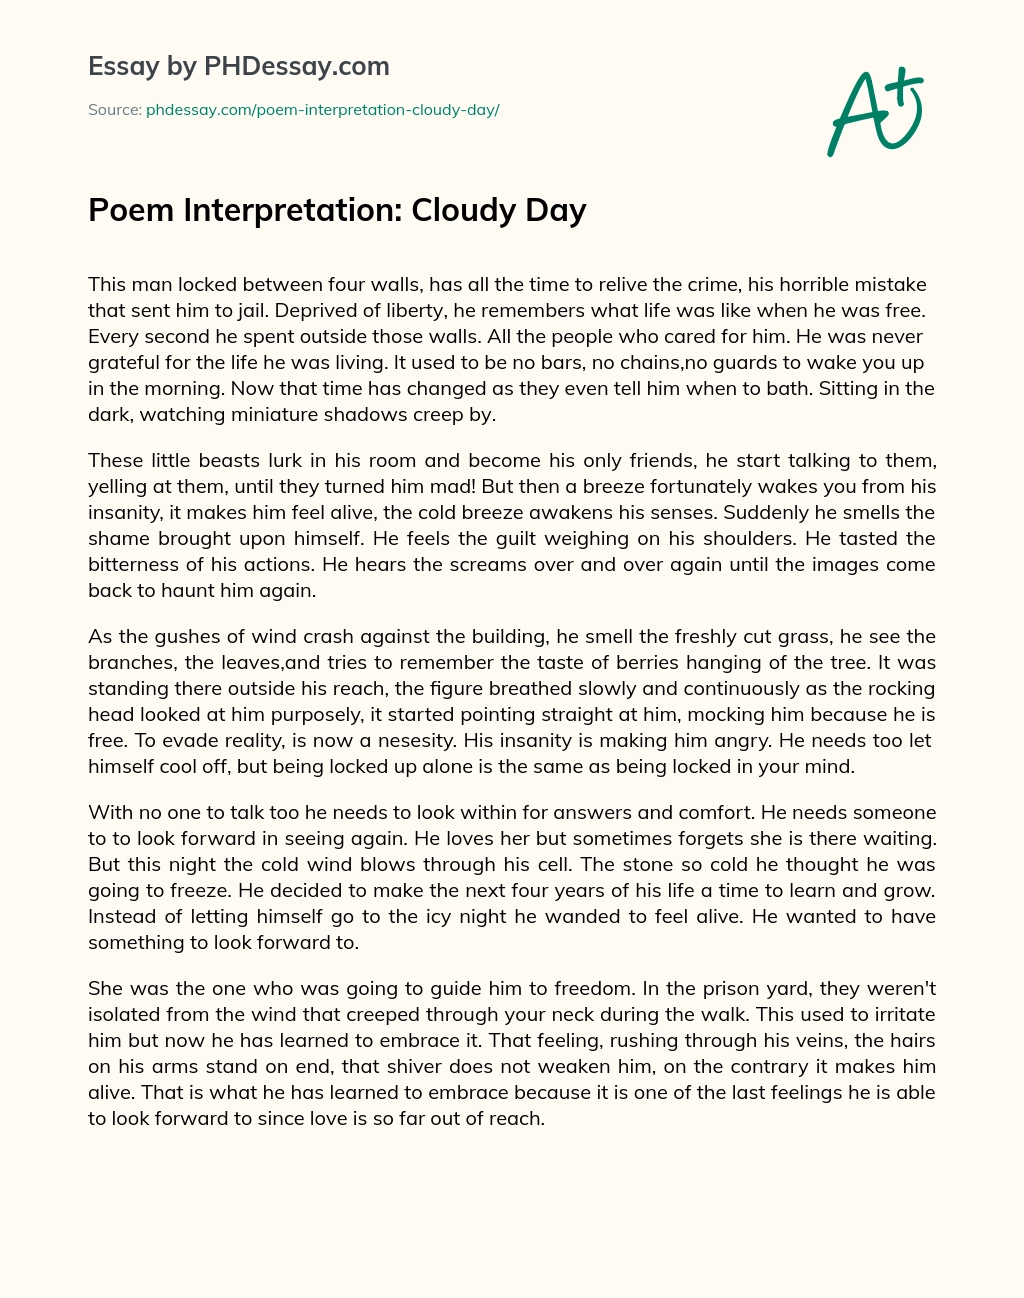 Poem Interpretation: Cloudy Day essay